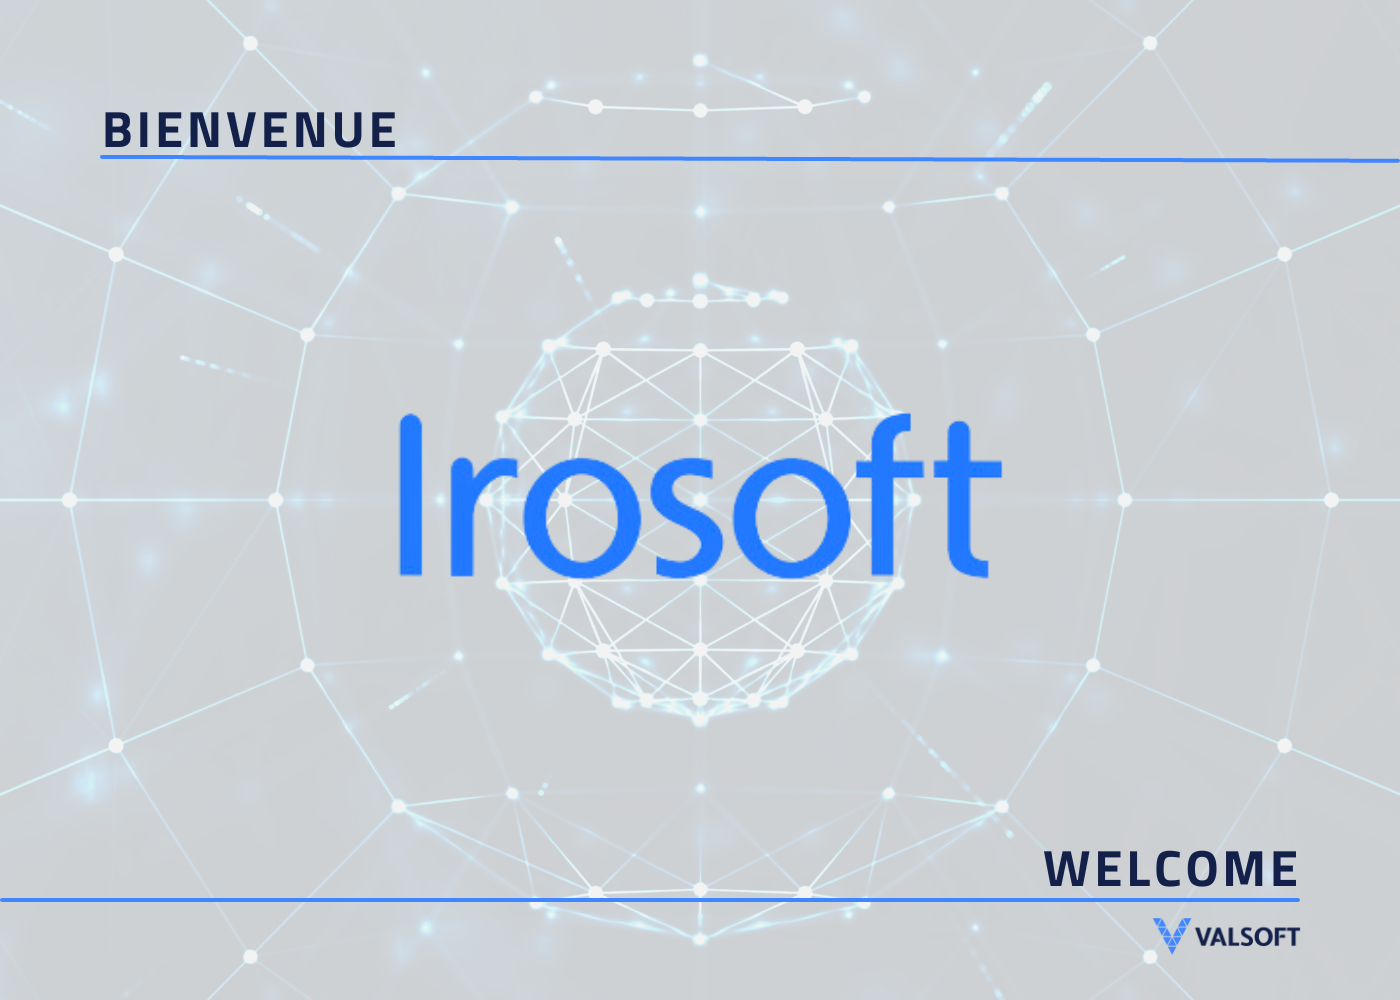 Irosoft Welcome